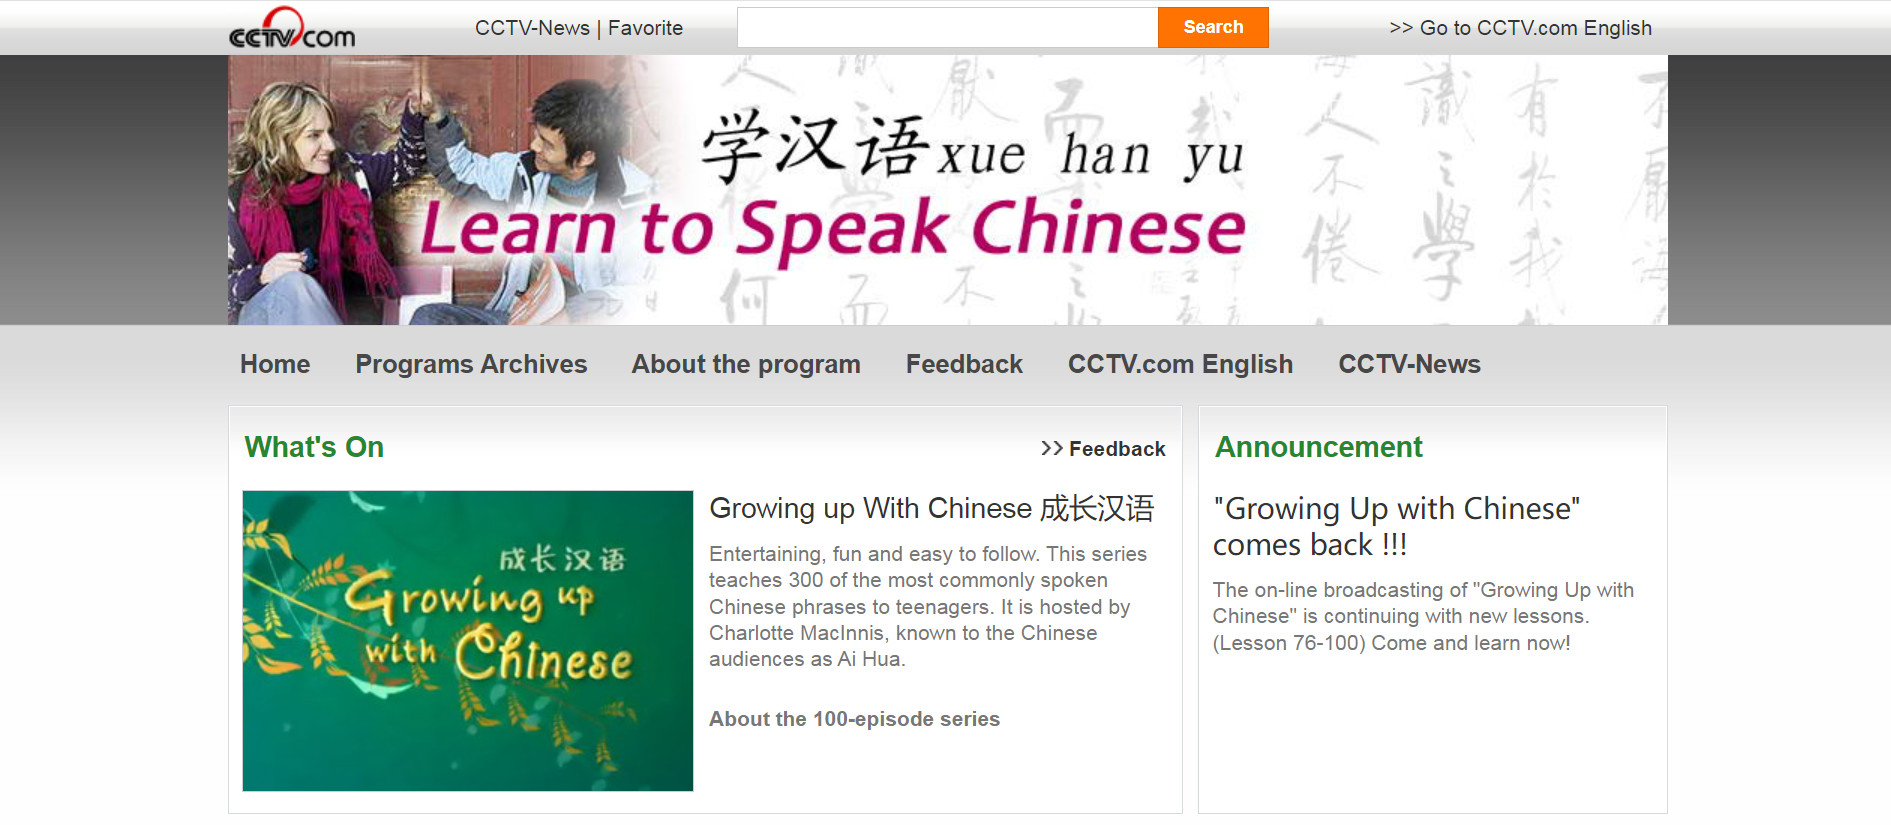 trang web CCTV Learn Chinese 